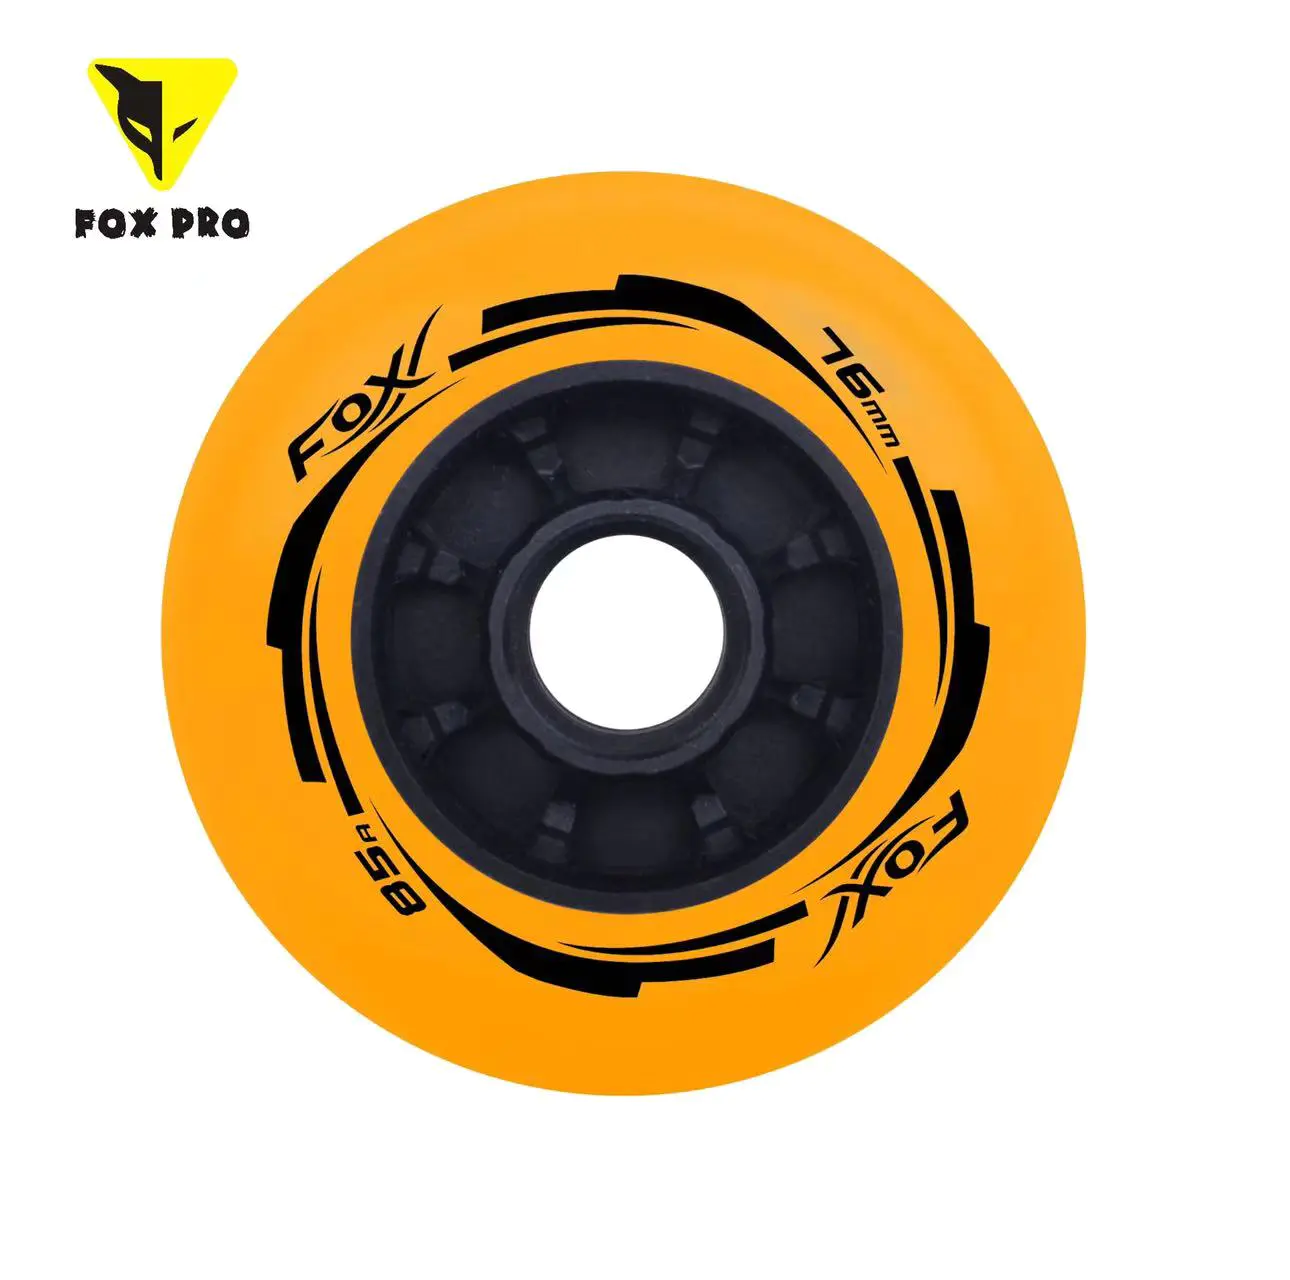 FOX PRO-MIS Inline Speed Skate Wheel Super High Rebound PU Oudoor Indoor Sport Repalcement Wheels Speed Skate Wheel